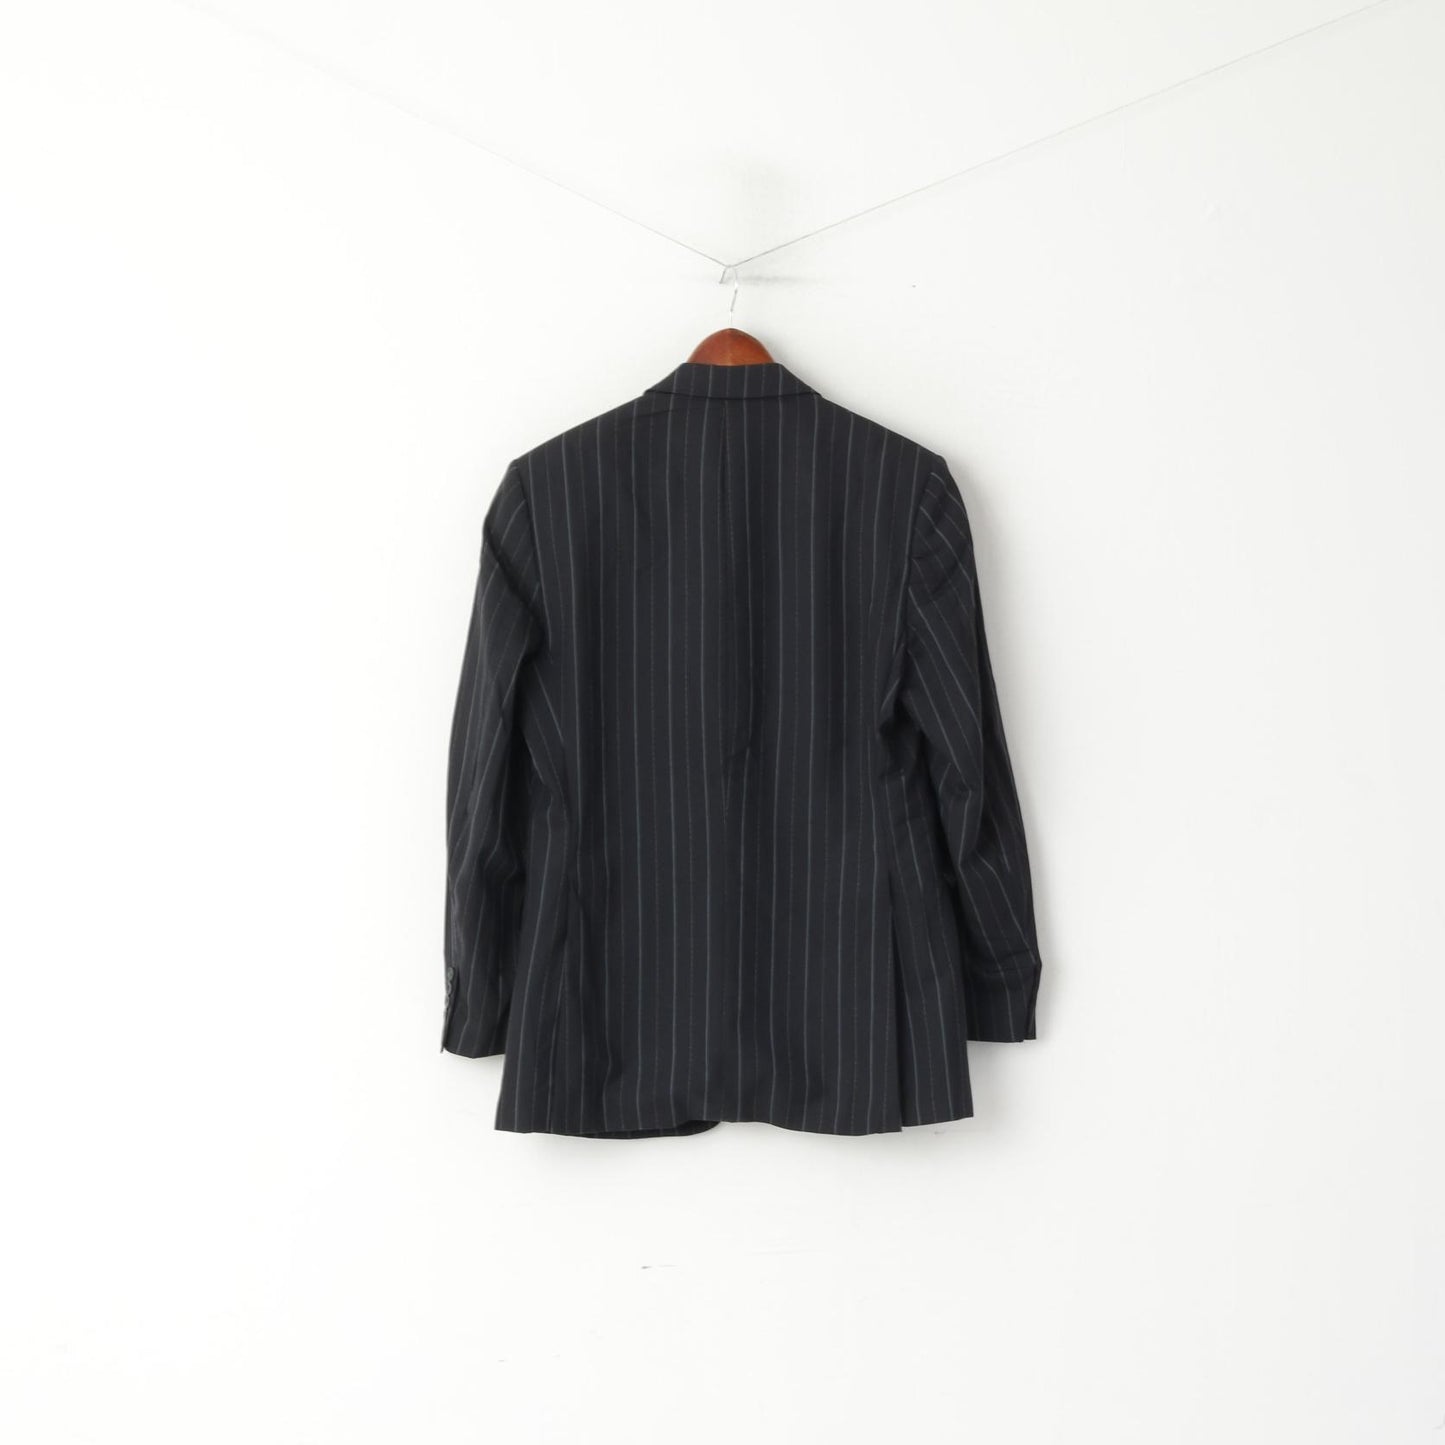 Aquascutum London Men 40 R Blazer Black Striped Wool Single Breasted Jacket